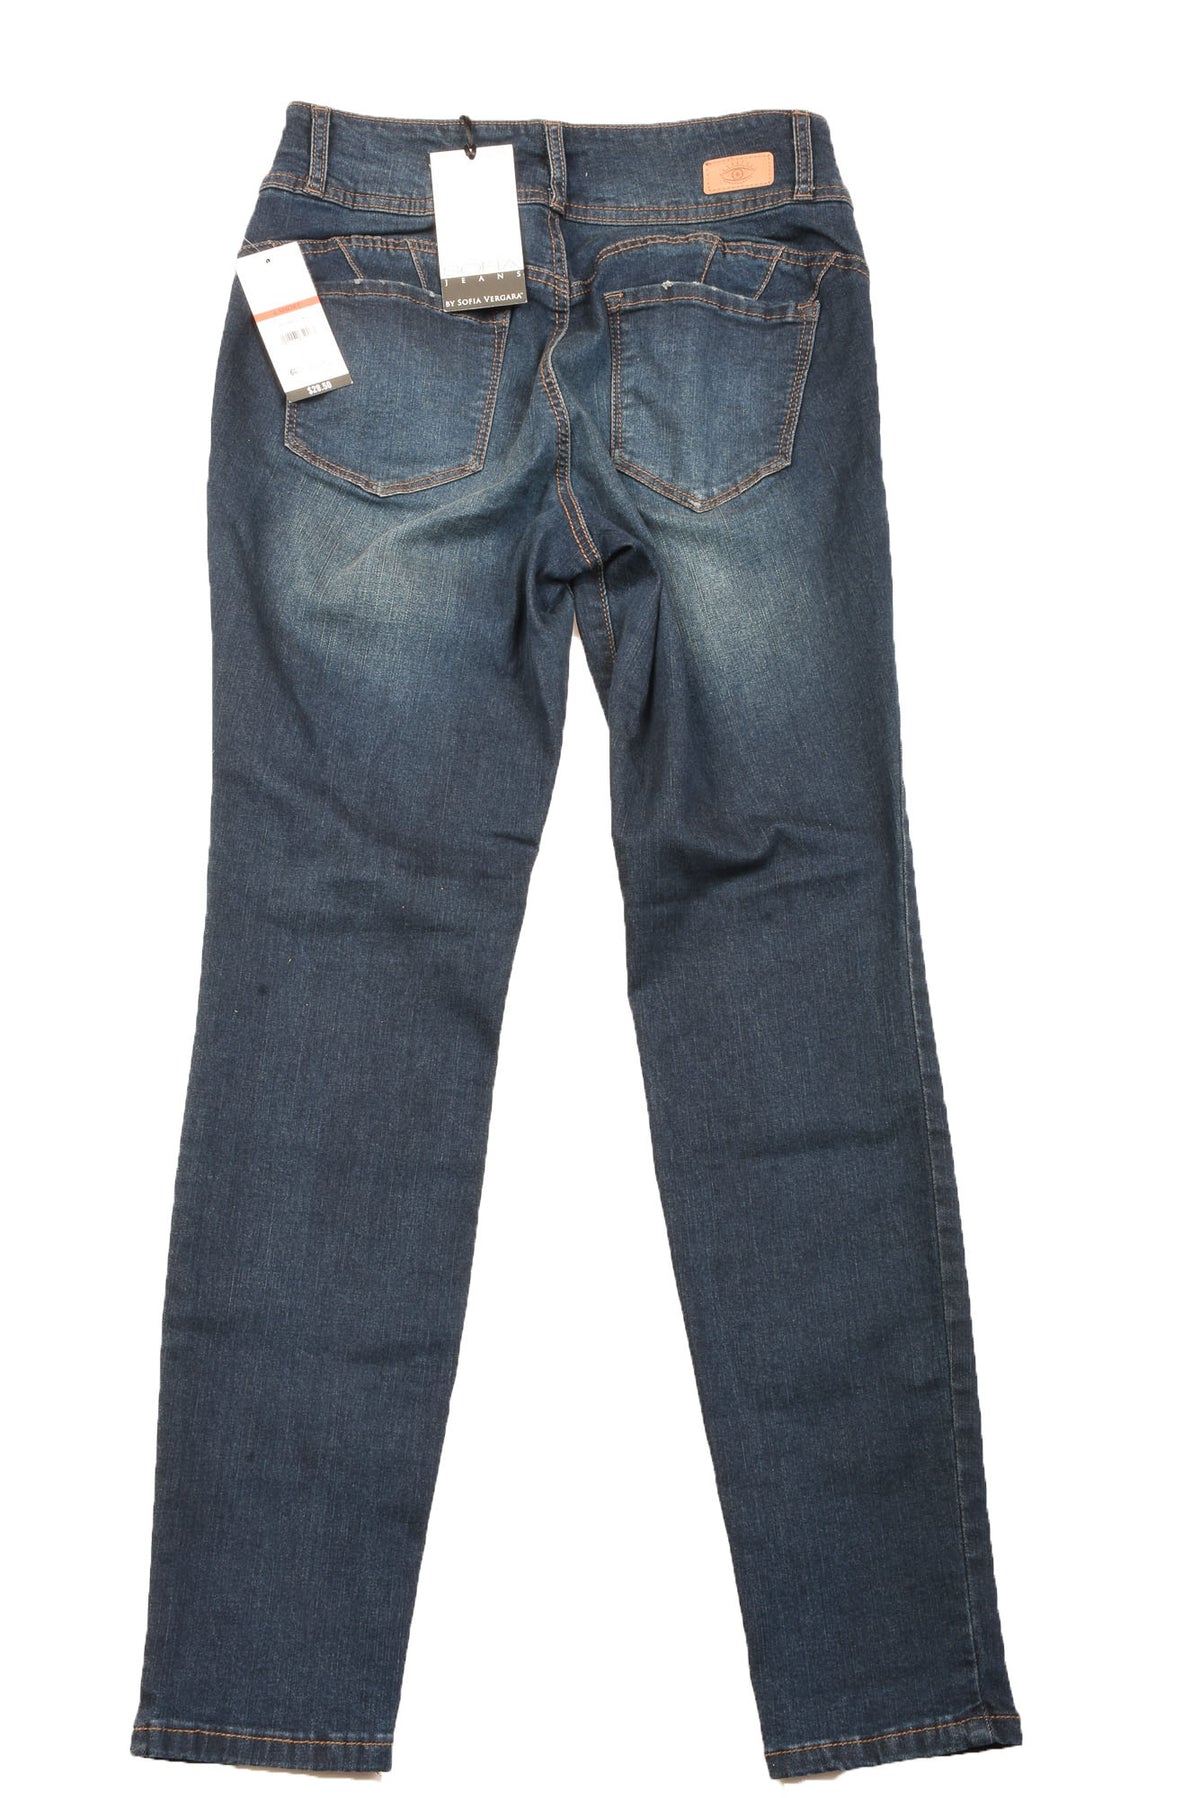 Sofin Jeans Size 6 Short Women's Jeans - Your Designer Thrift